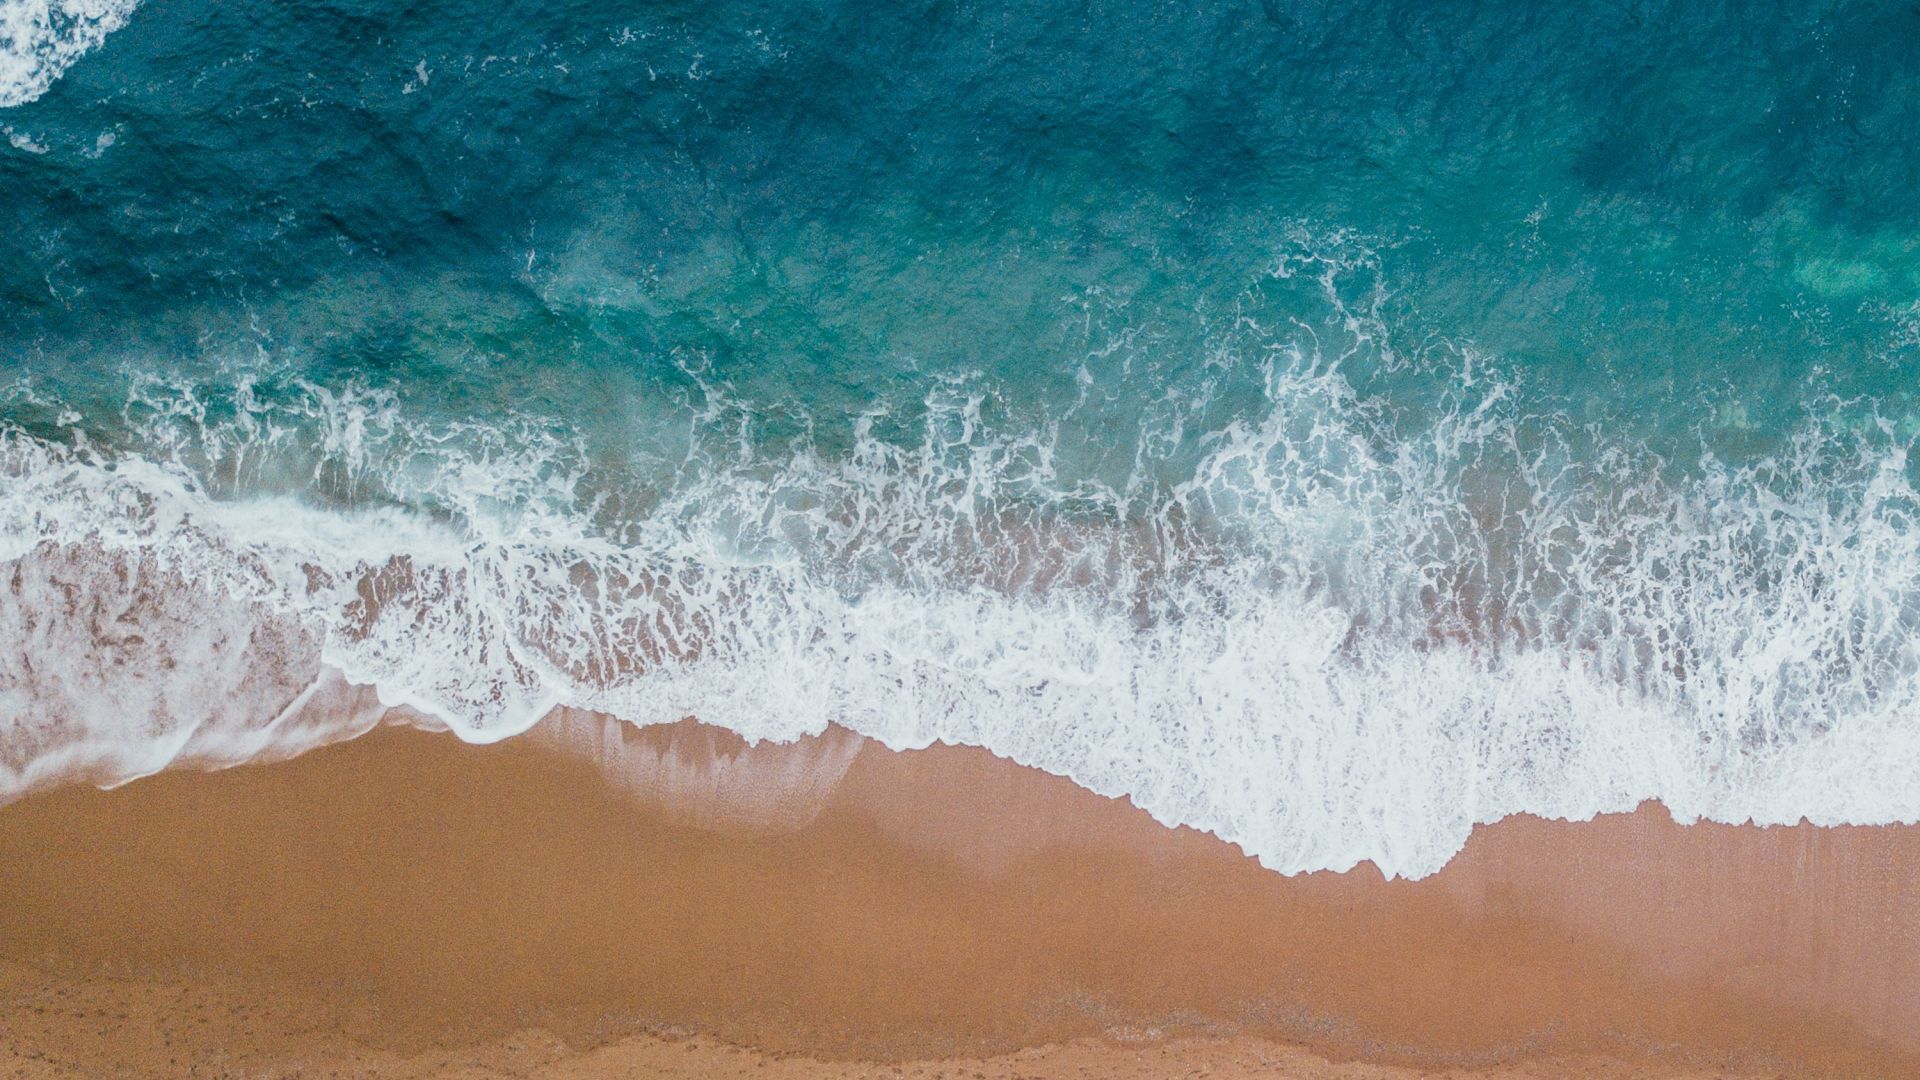 Desktop Wallpaper The Waves, Beach, Aerial View, Blue Sea, Hd Image